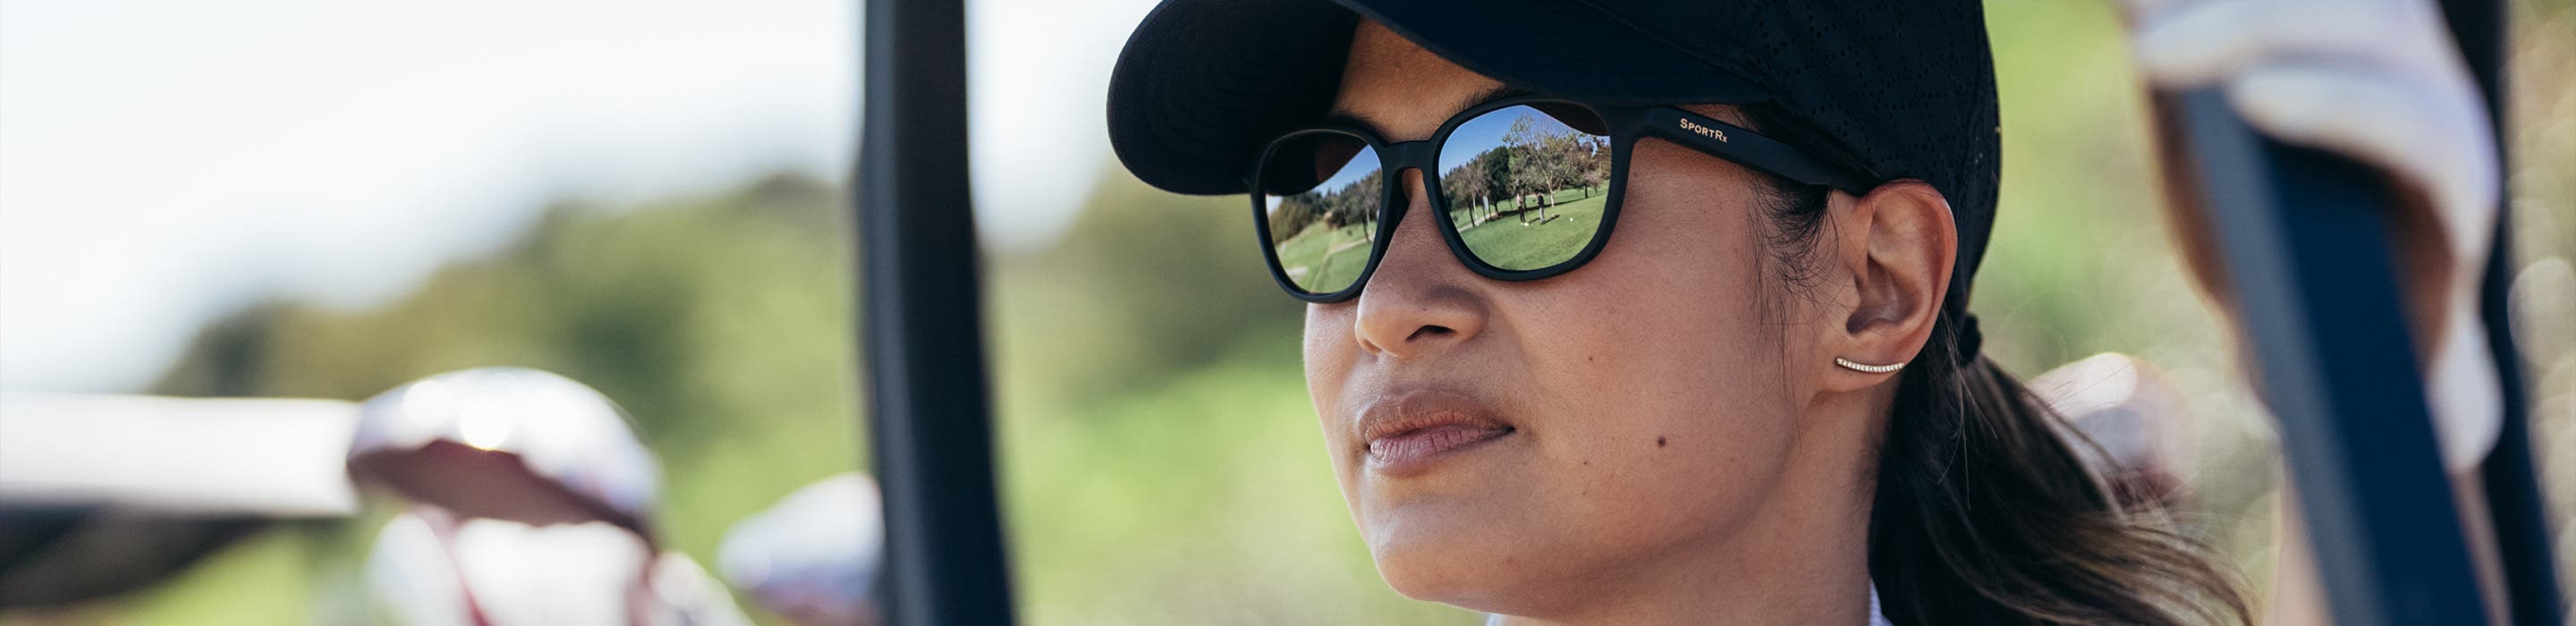 https://www.sportrx.com/media/wysiwyg/womens-golf-prescription-sunglasses.jpg